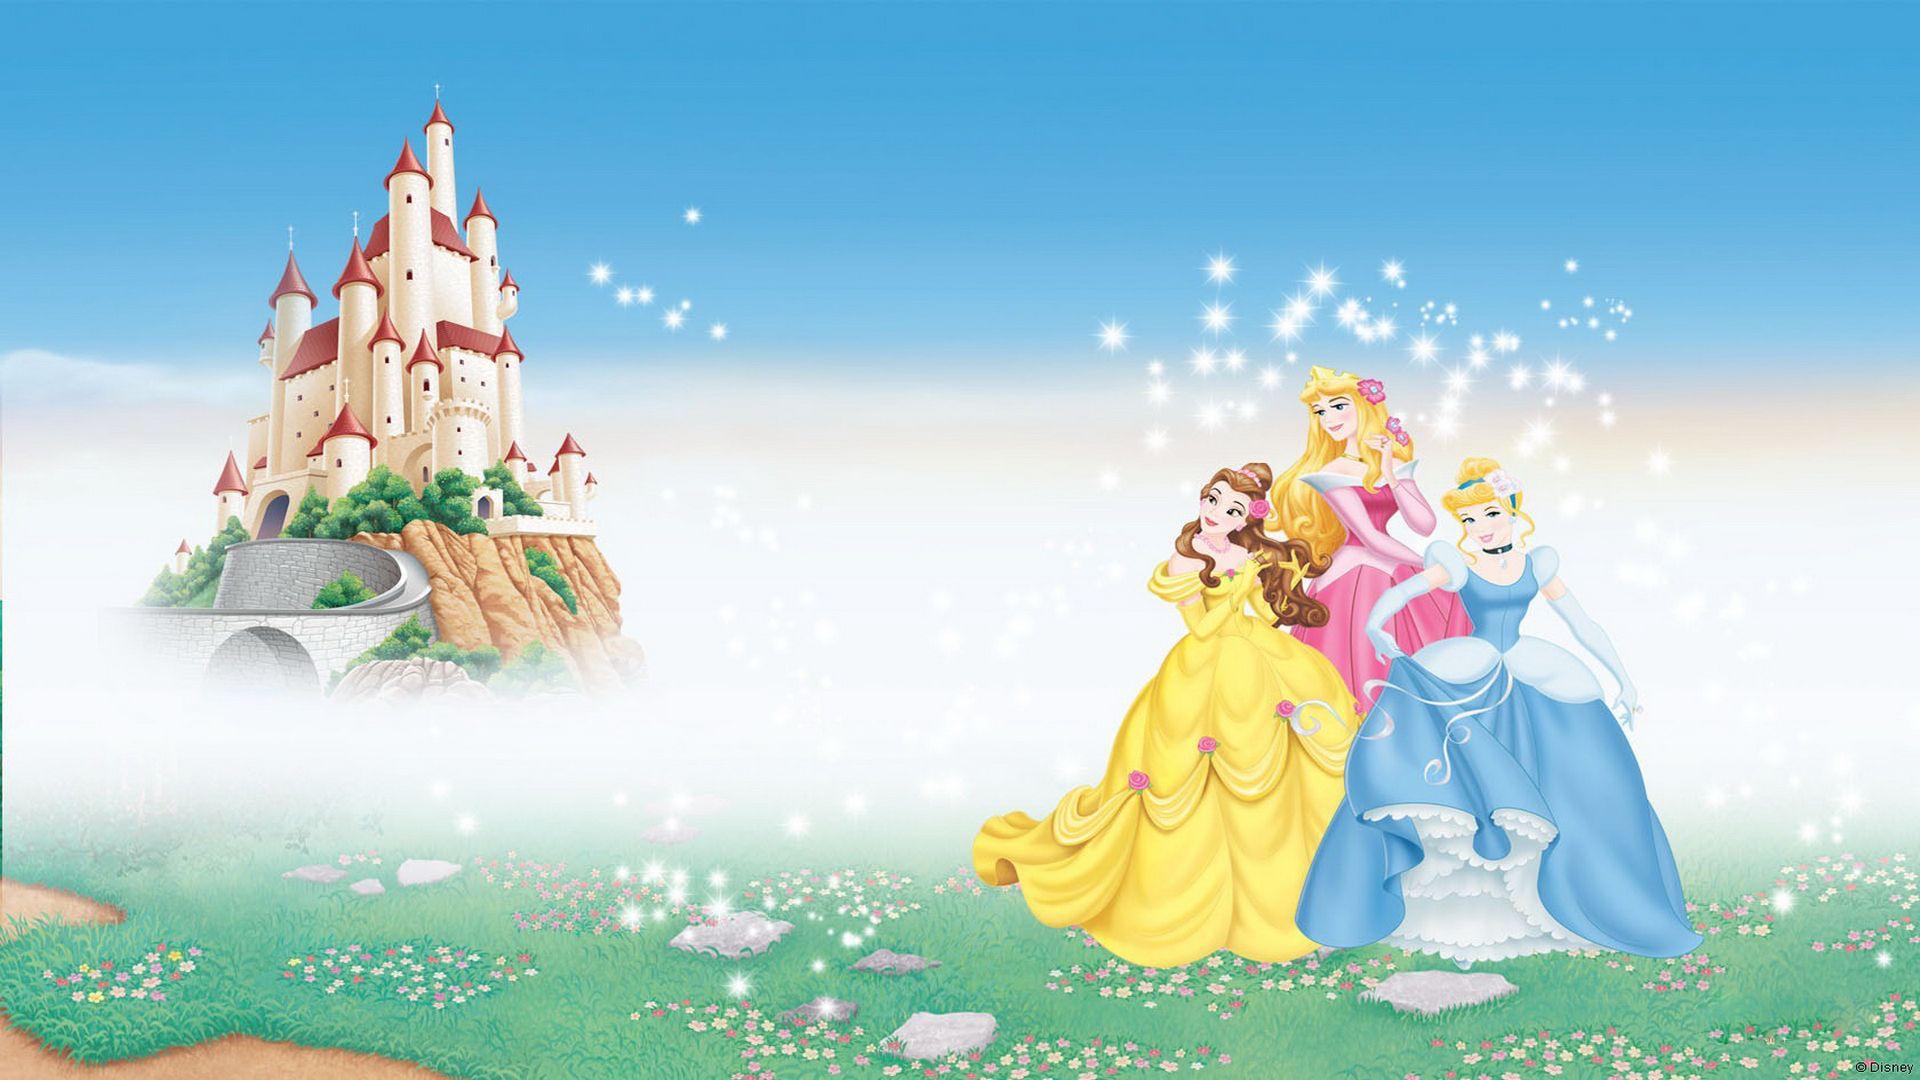 Cute Disney Princess Wallpapers - Top Free Cute Disney Princess ...